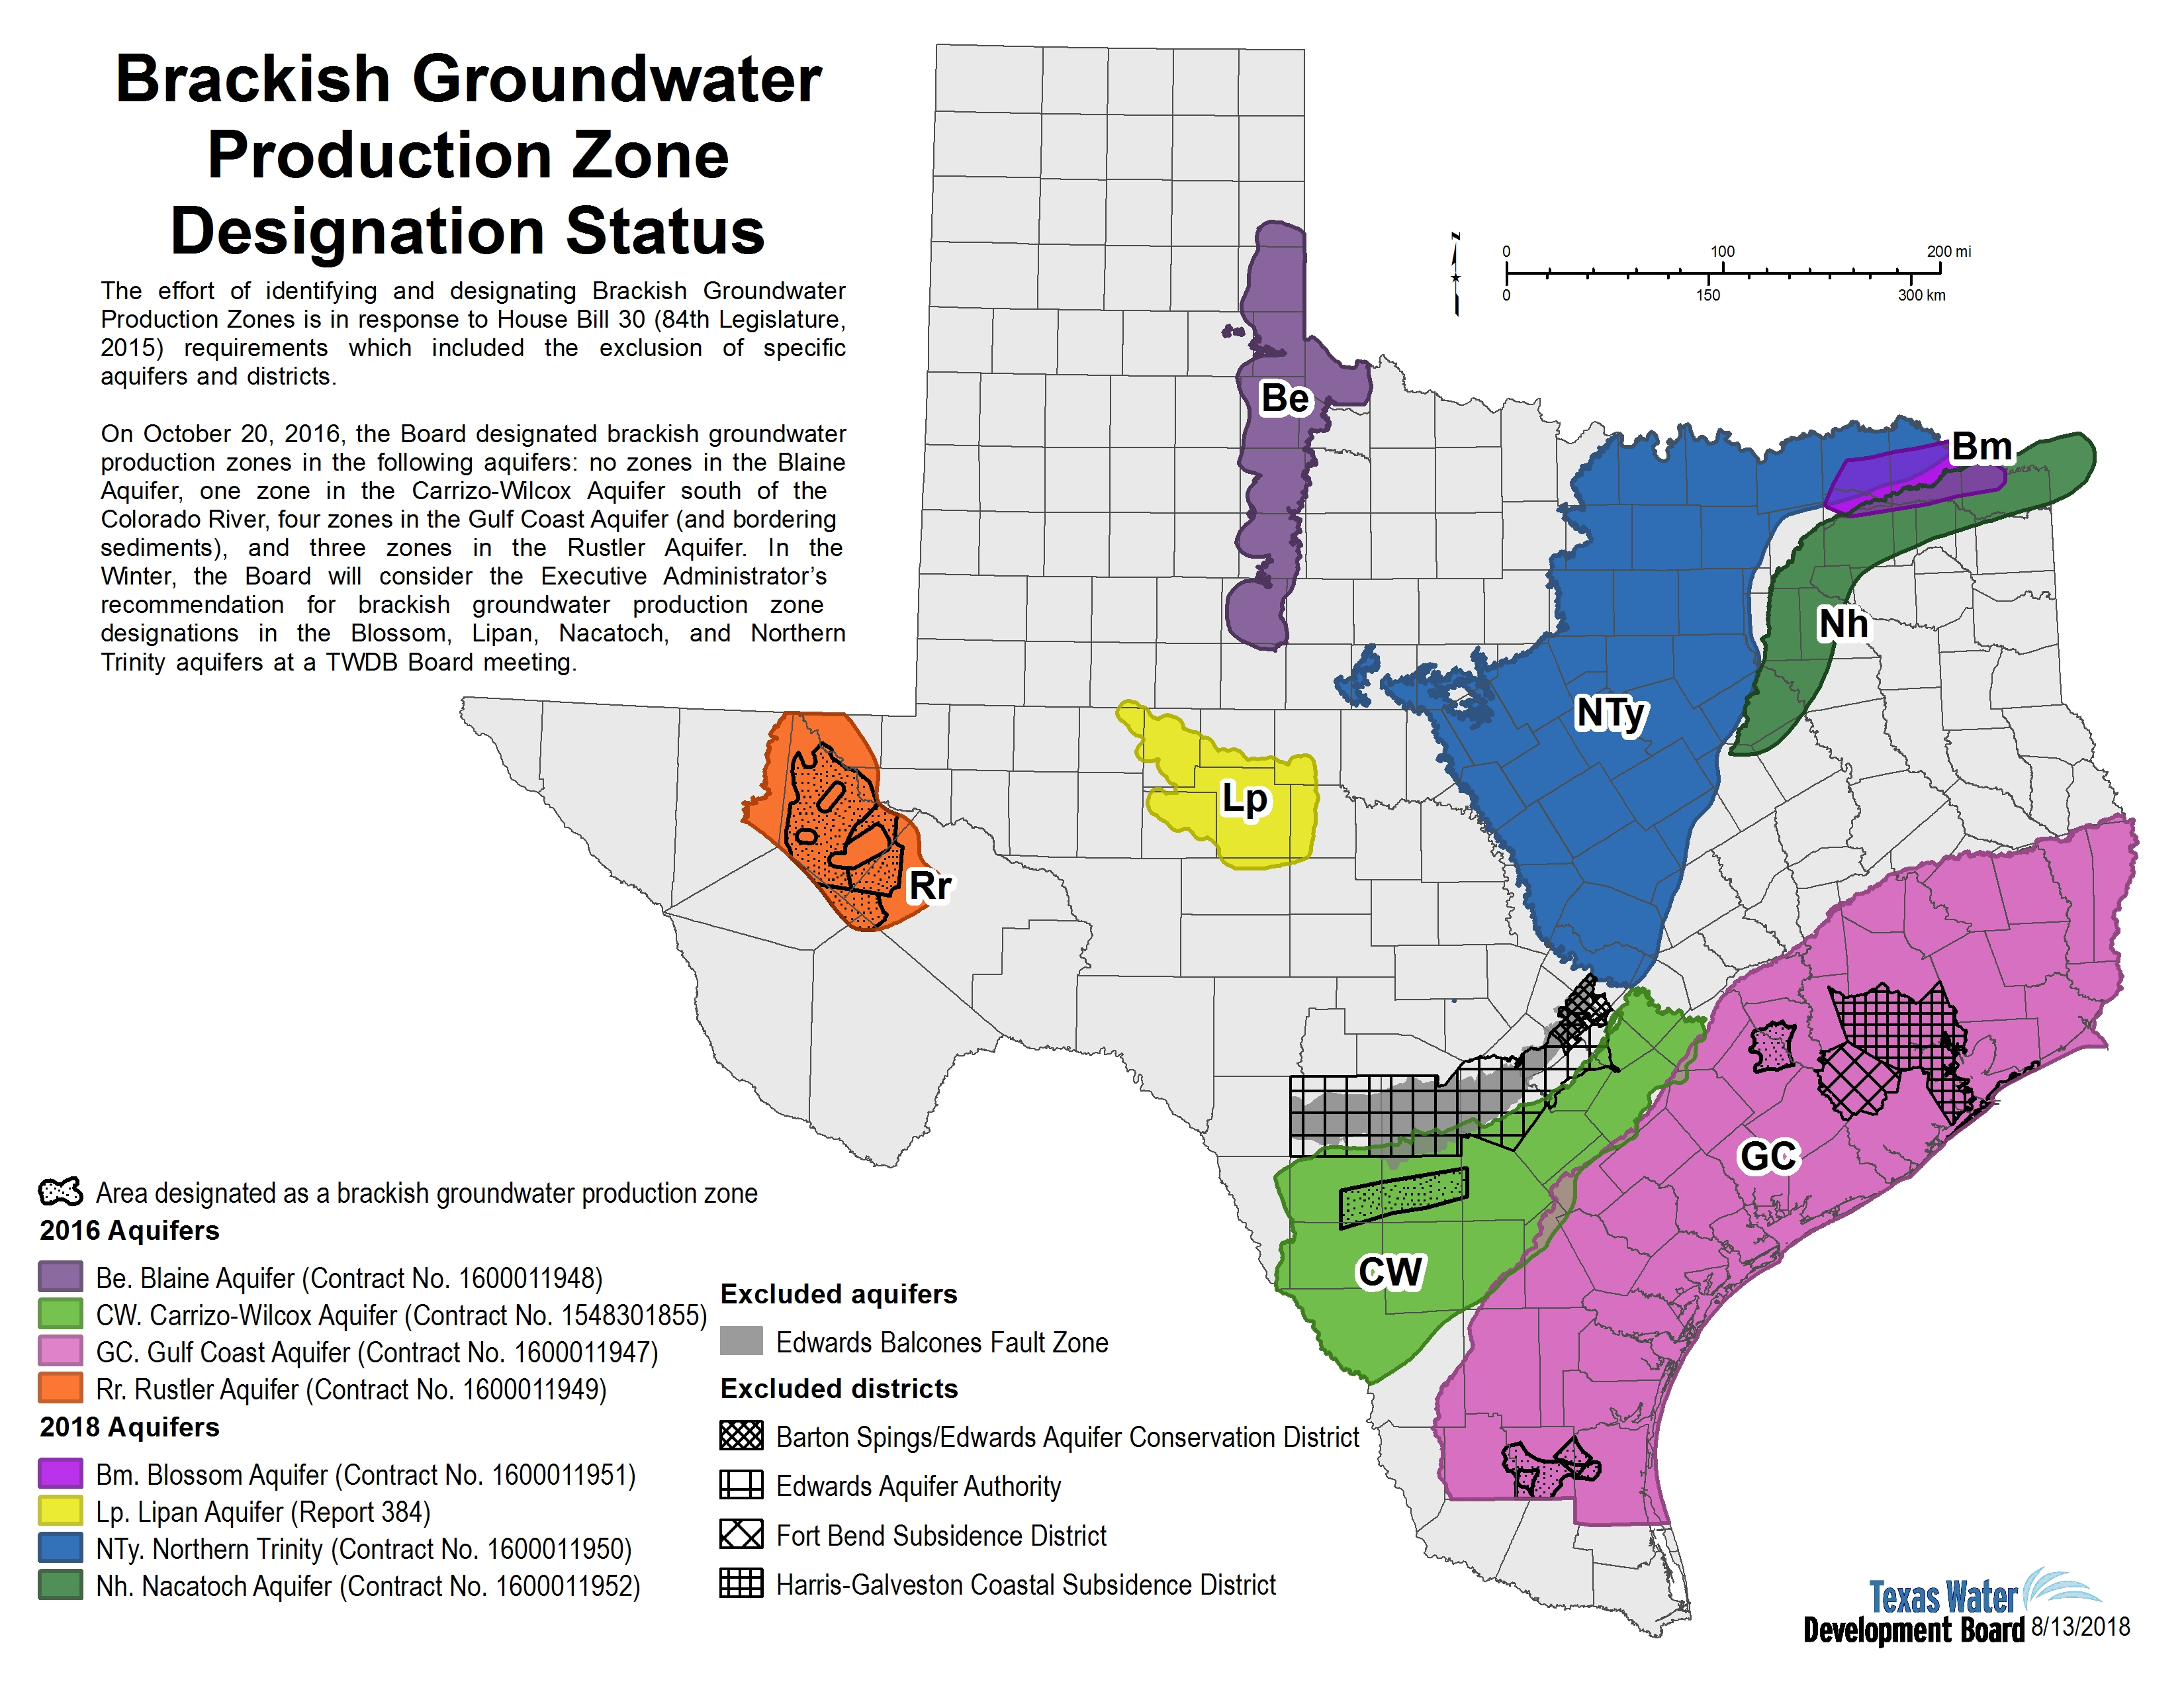 Innovative Water Technologies - Brackish Groundwater Production - Texas Water Development Board Well Map